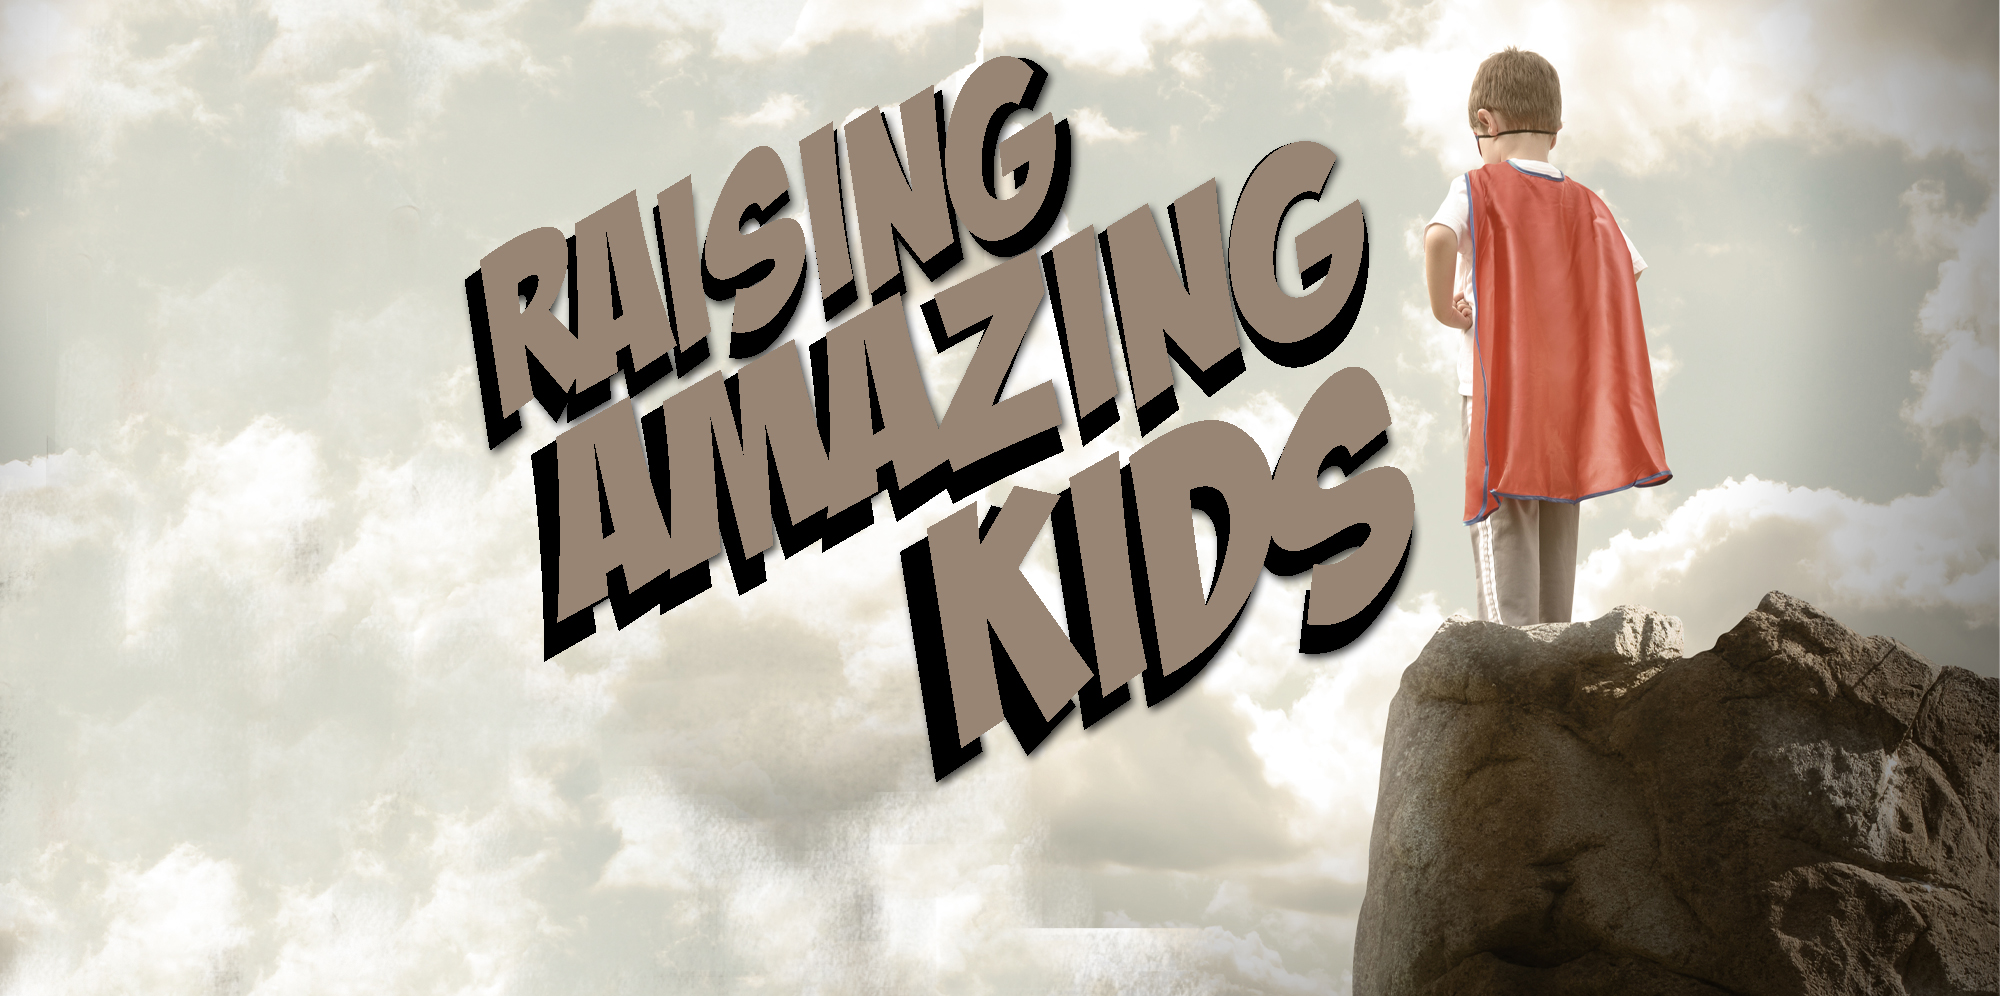 10-06-13 Raising Amazing Kids - Part 3 - Purpose Driven Kids